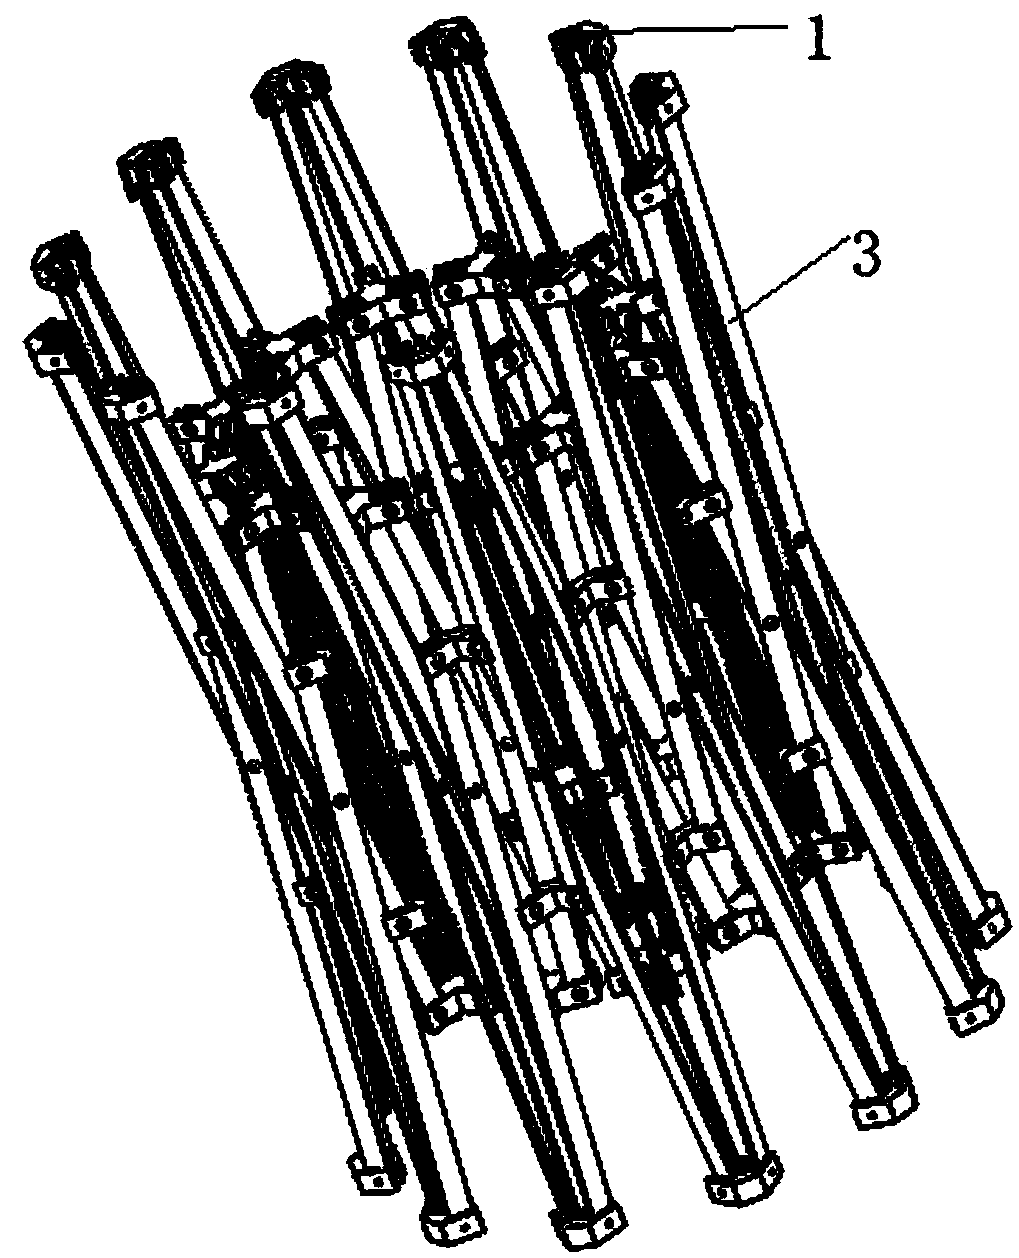 Peripheral truss deployable antenna mechanism based on V-shaped shear type unit bodies